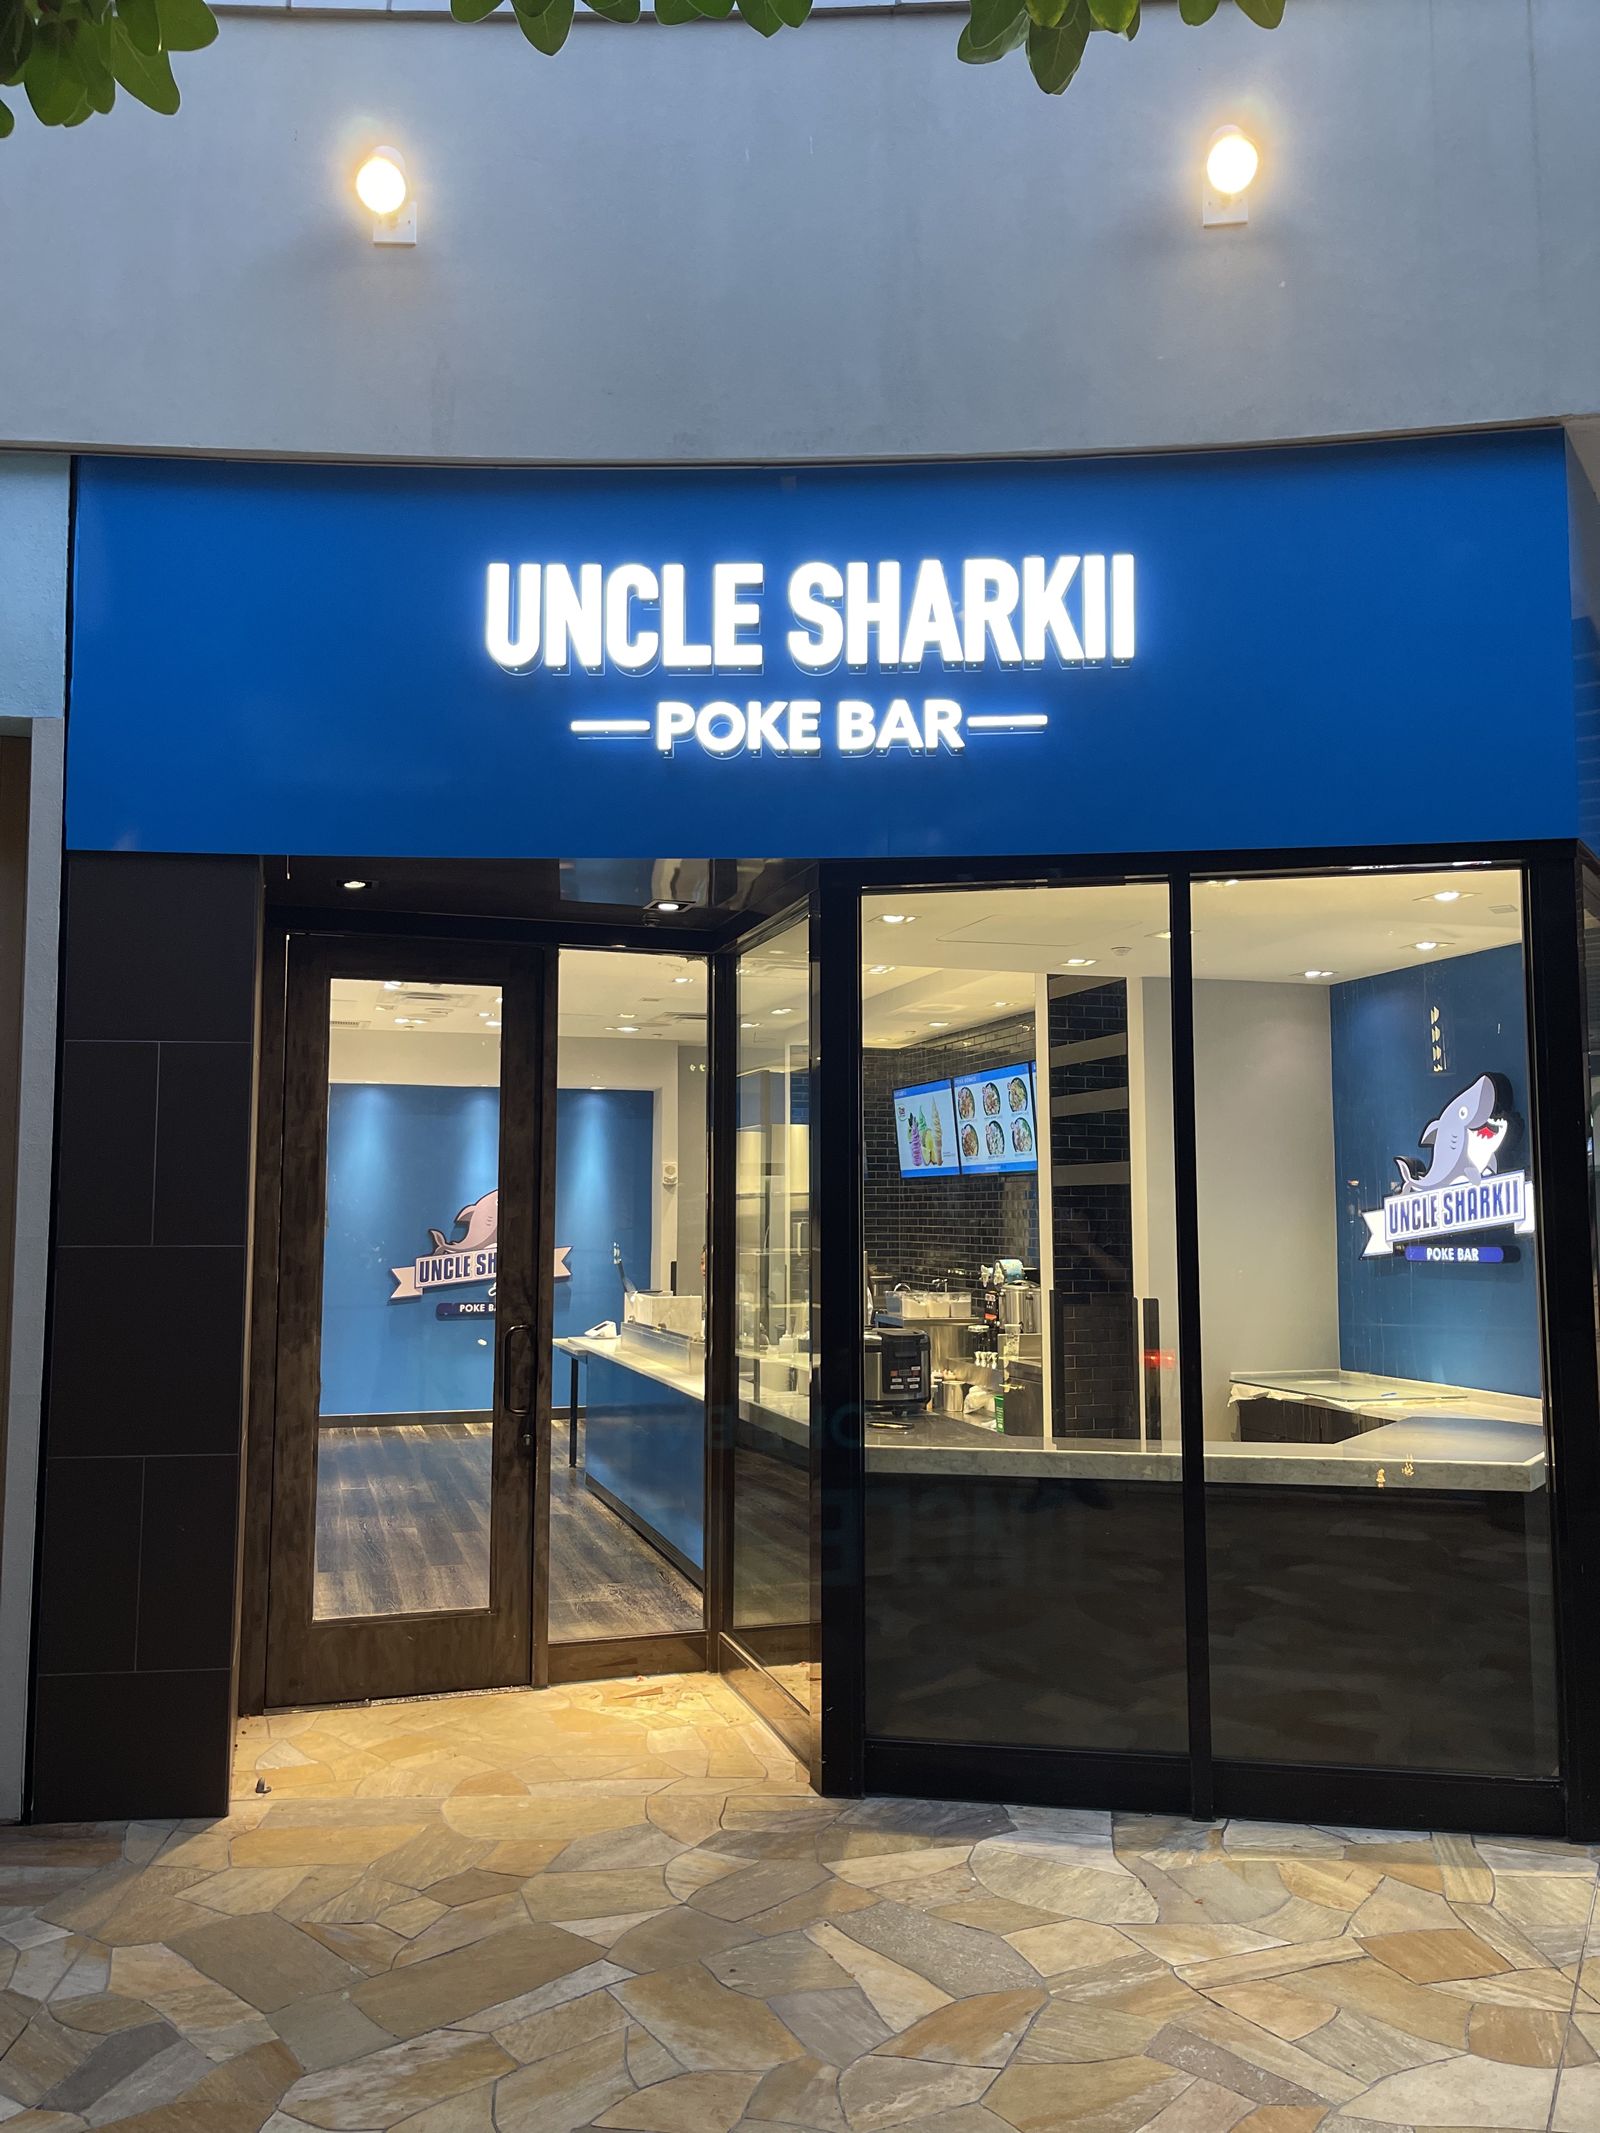 Uncle Sharkii Poke Bar Now Open at Honolulu's Famed International Market Place